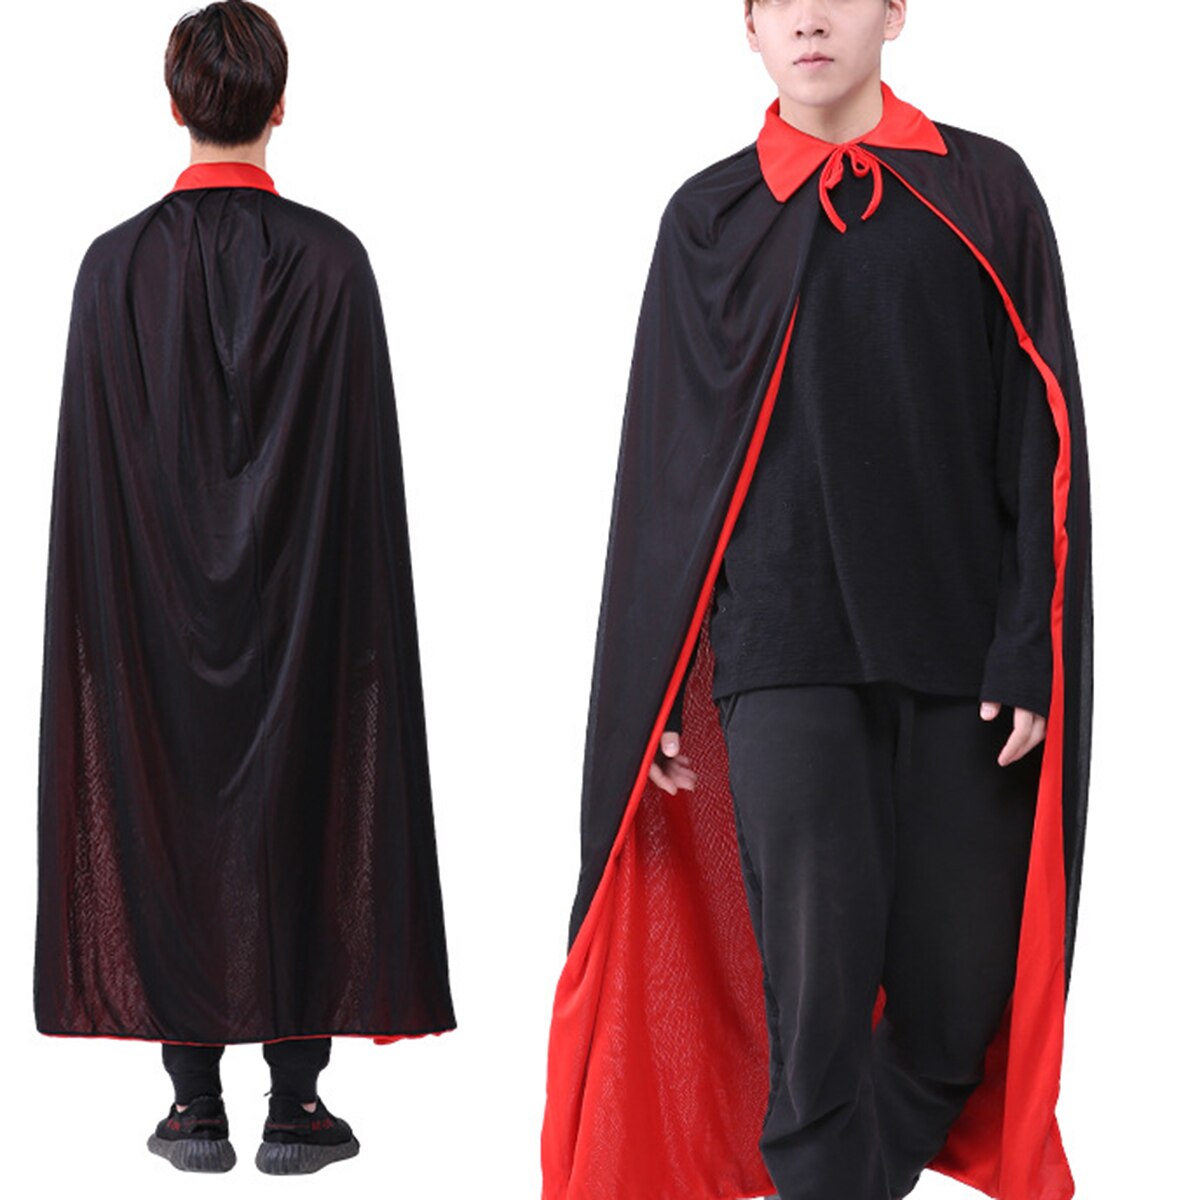 Halloween Kostuums Voor Jongens En Meisjes Mannen Kraag Of Hooded Death Vampier Mantel Cape Gown Rood Zwart 2 Side Wear party Robe